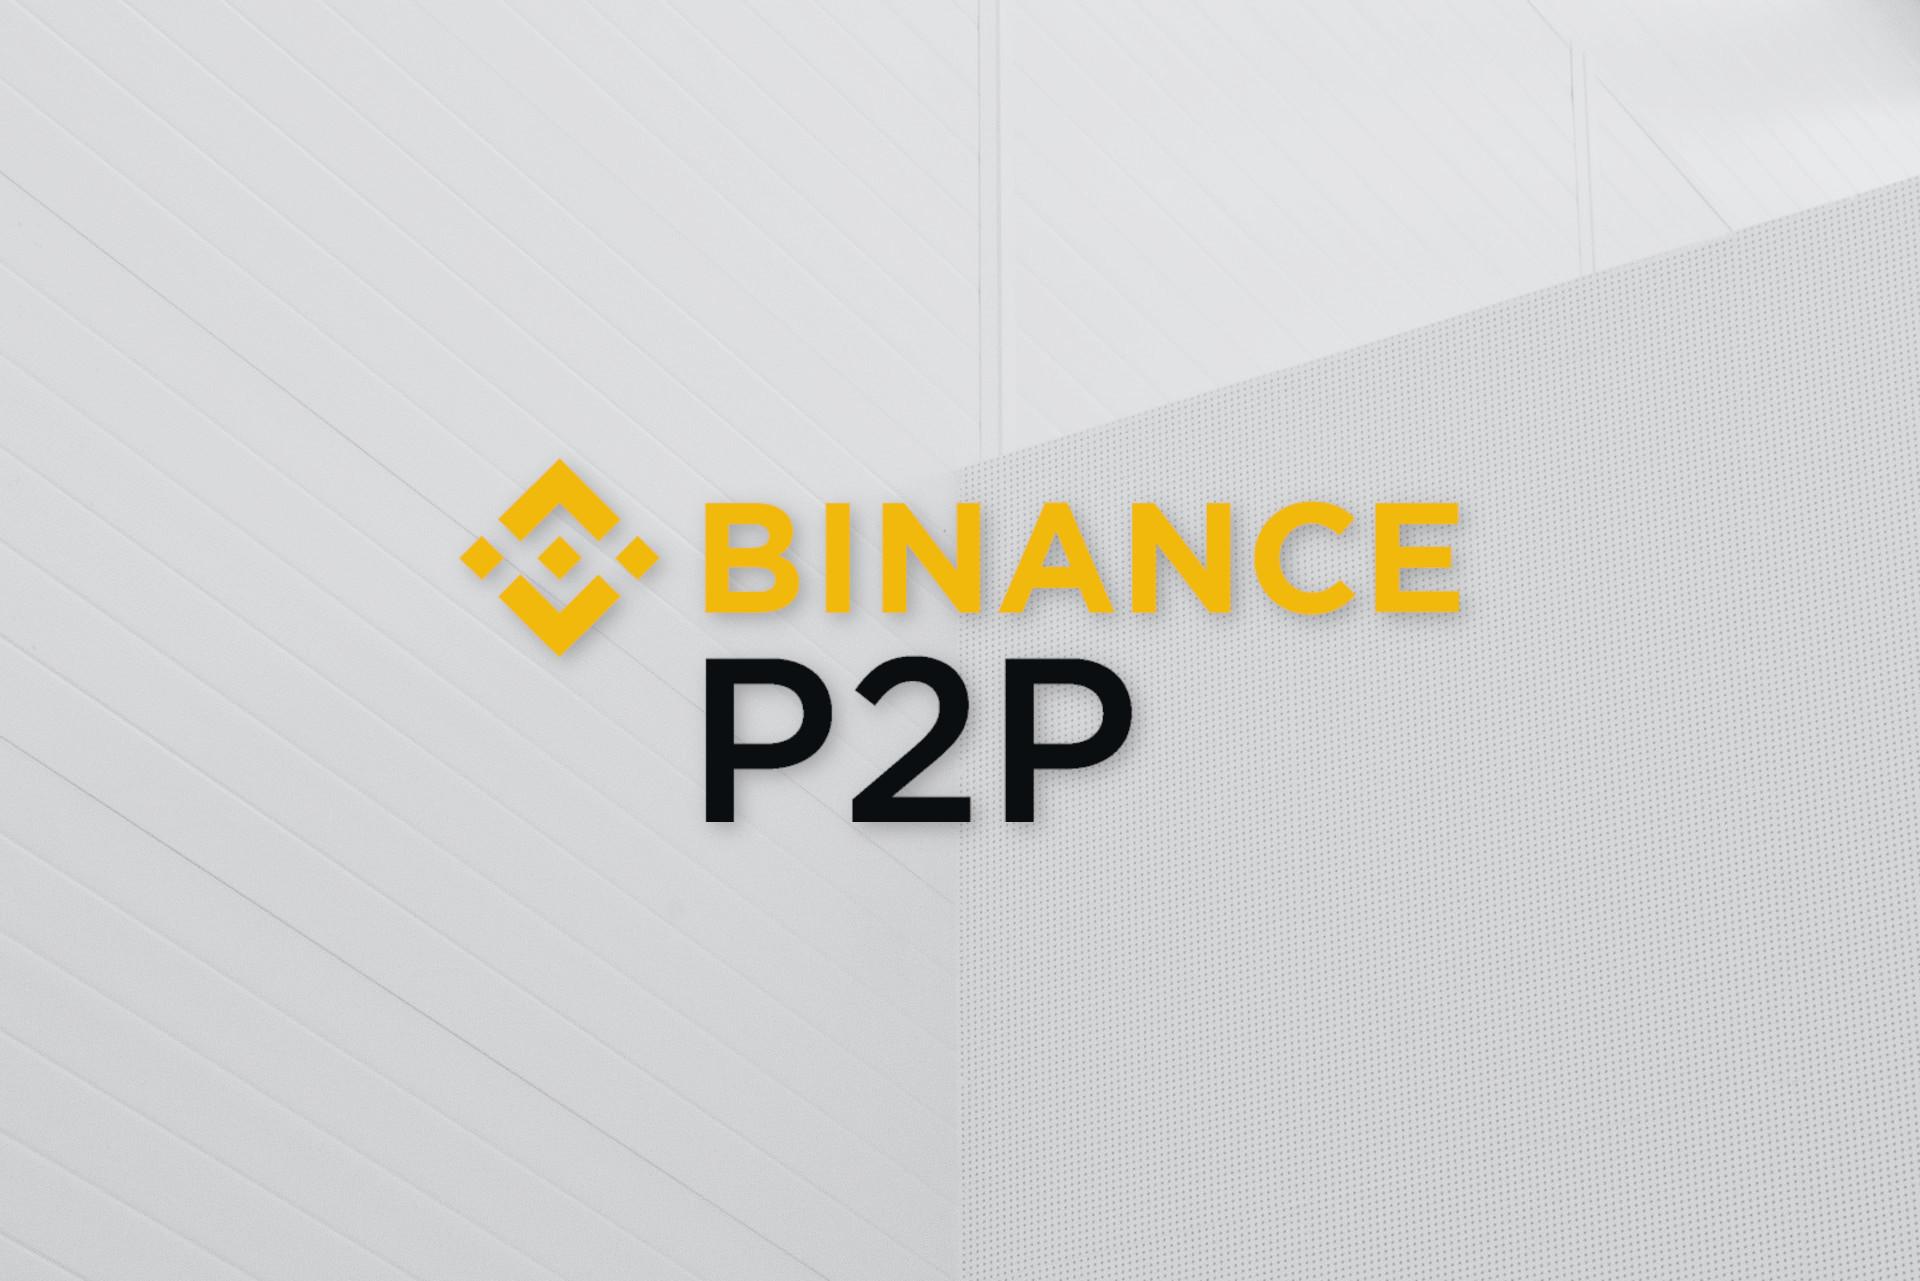 Binance P2P image cover